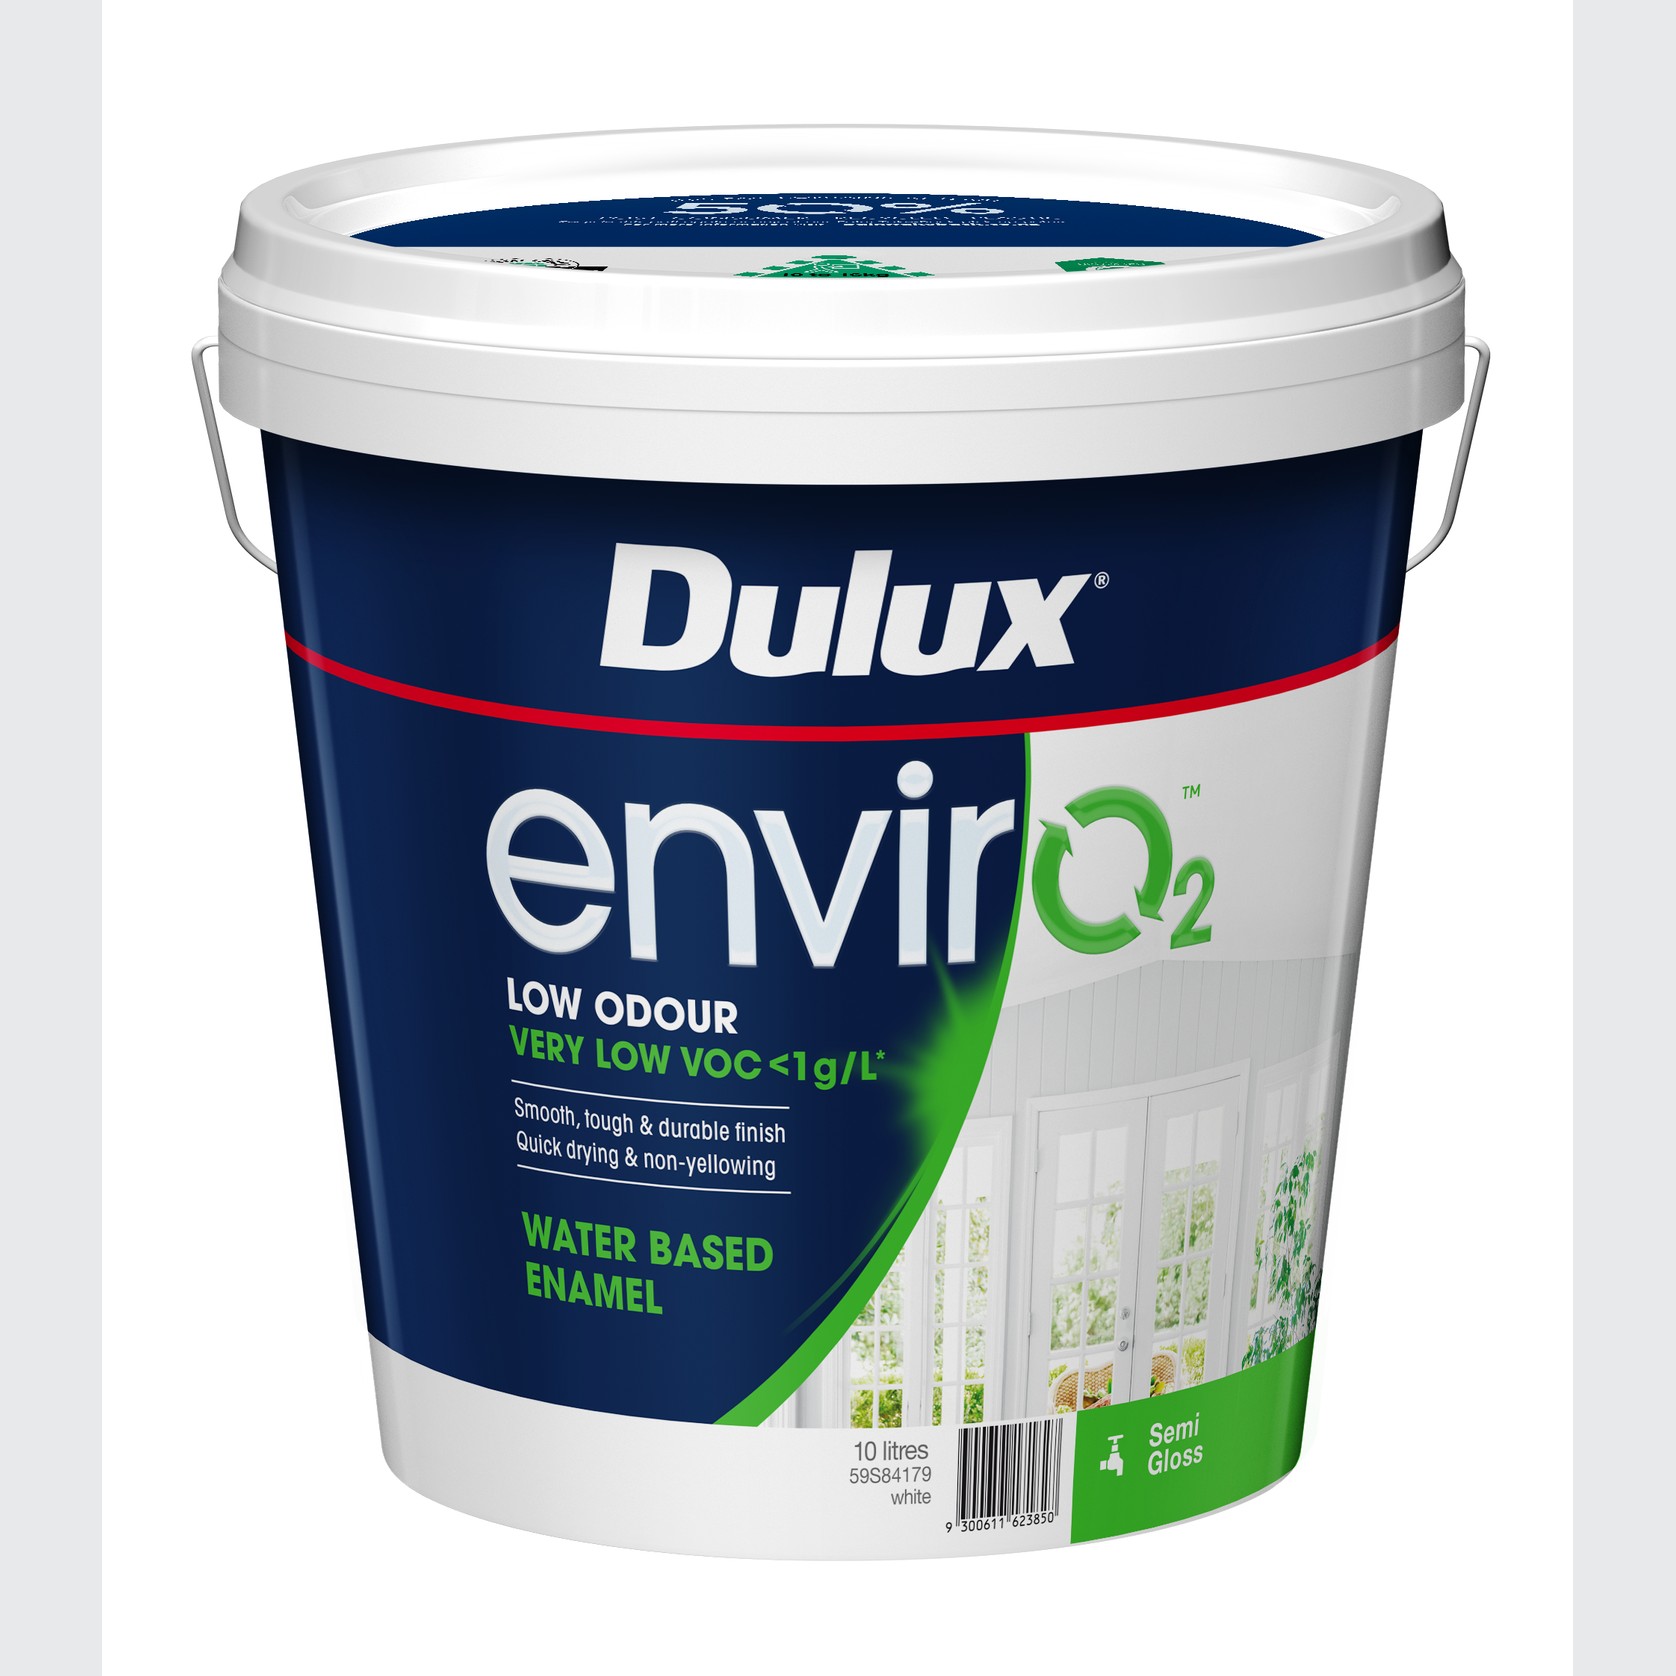 Dulux envirO2 - Water Based Enamel Semi Gloss gallery detail image